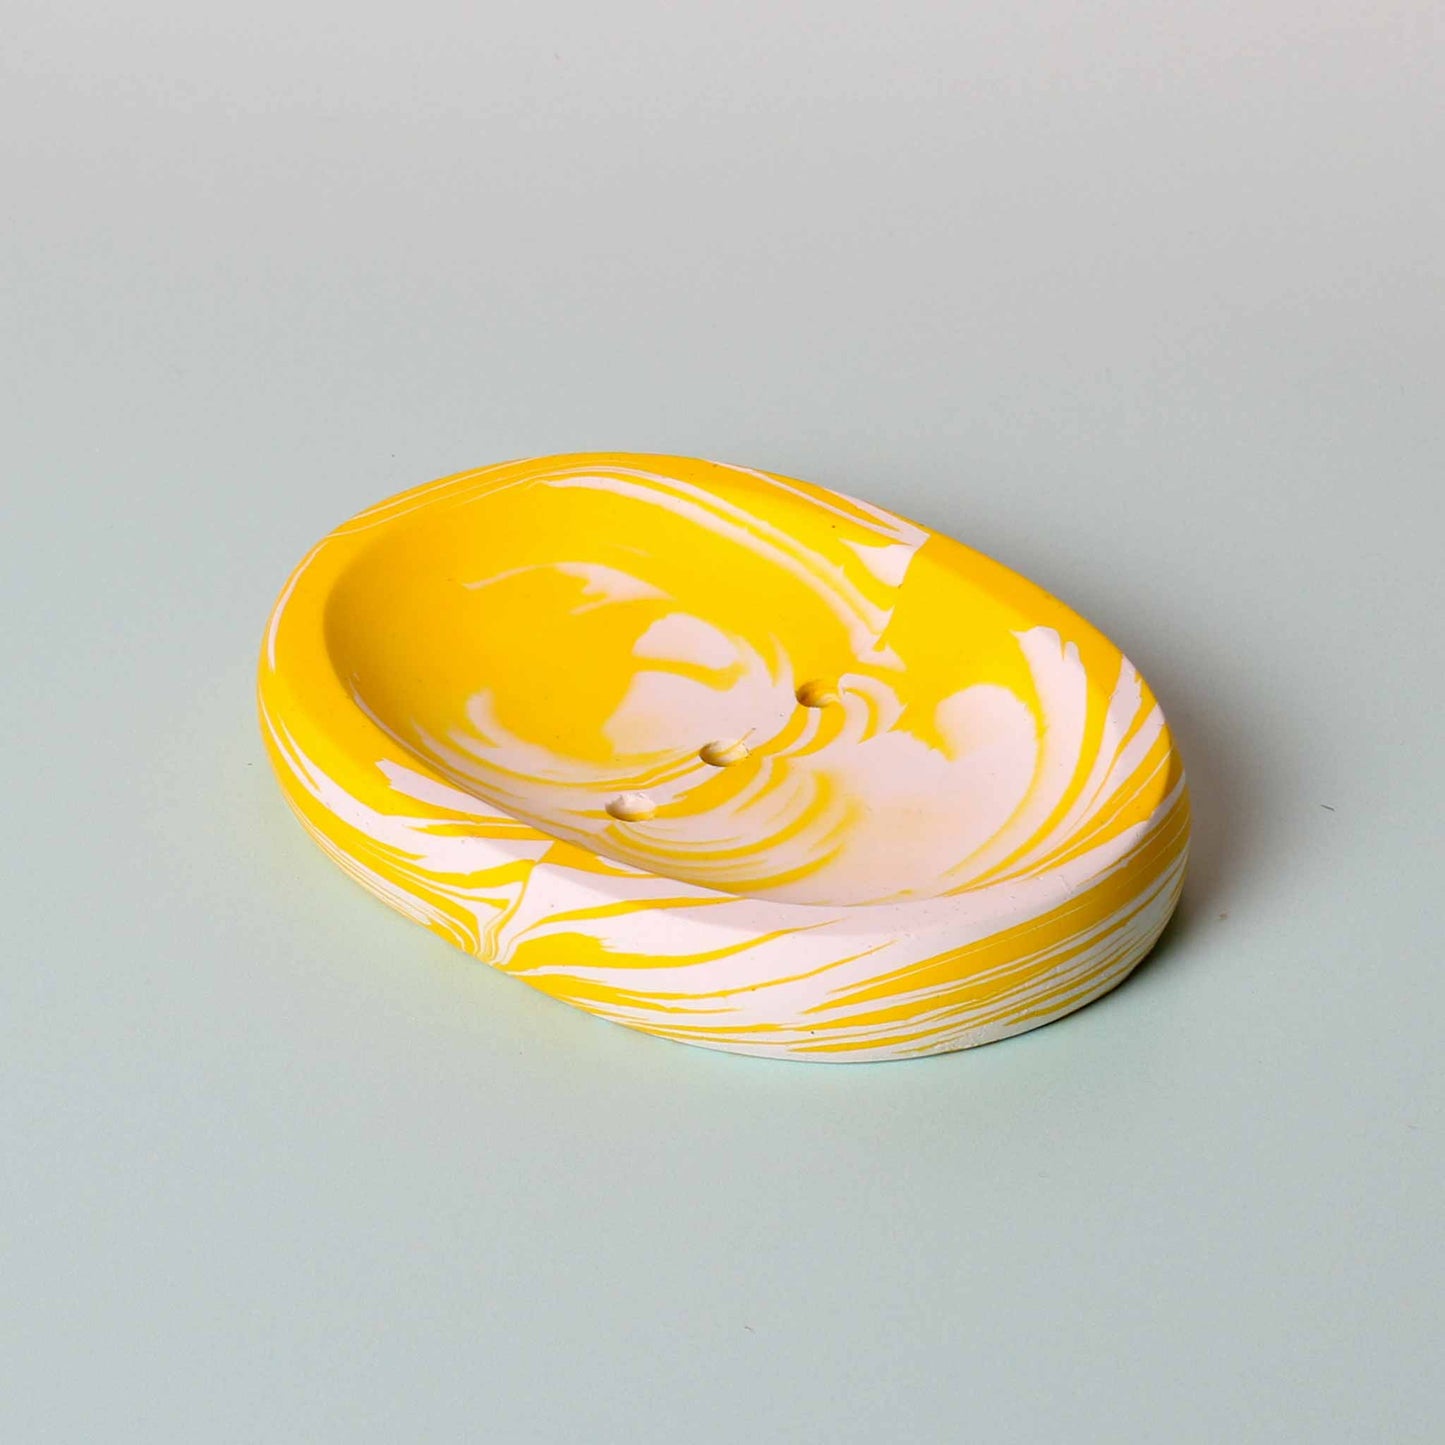 Terrazzo & Titz - Jesmonite Oval Soap Dish, Yellow & White Marble